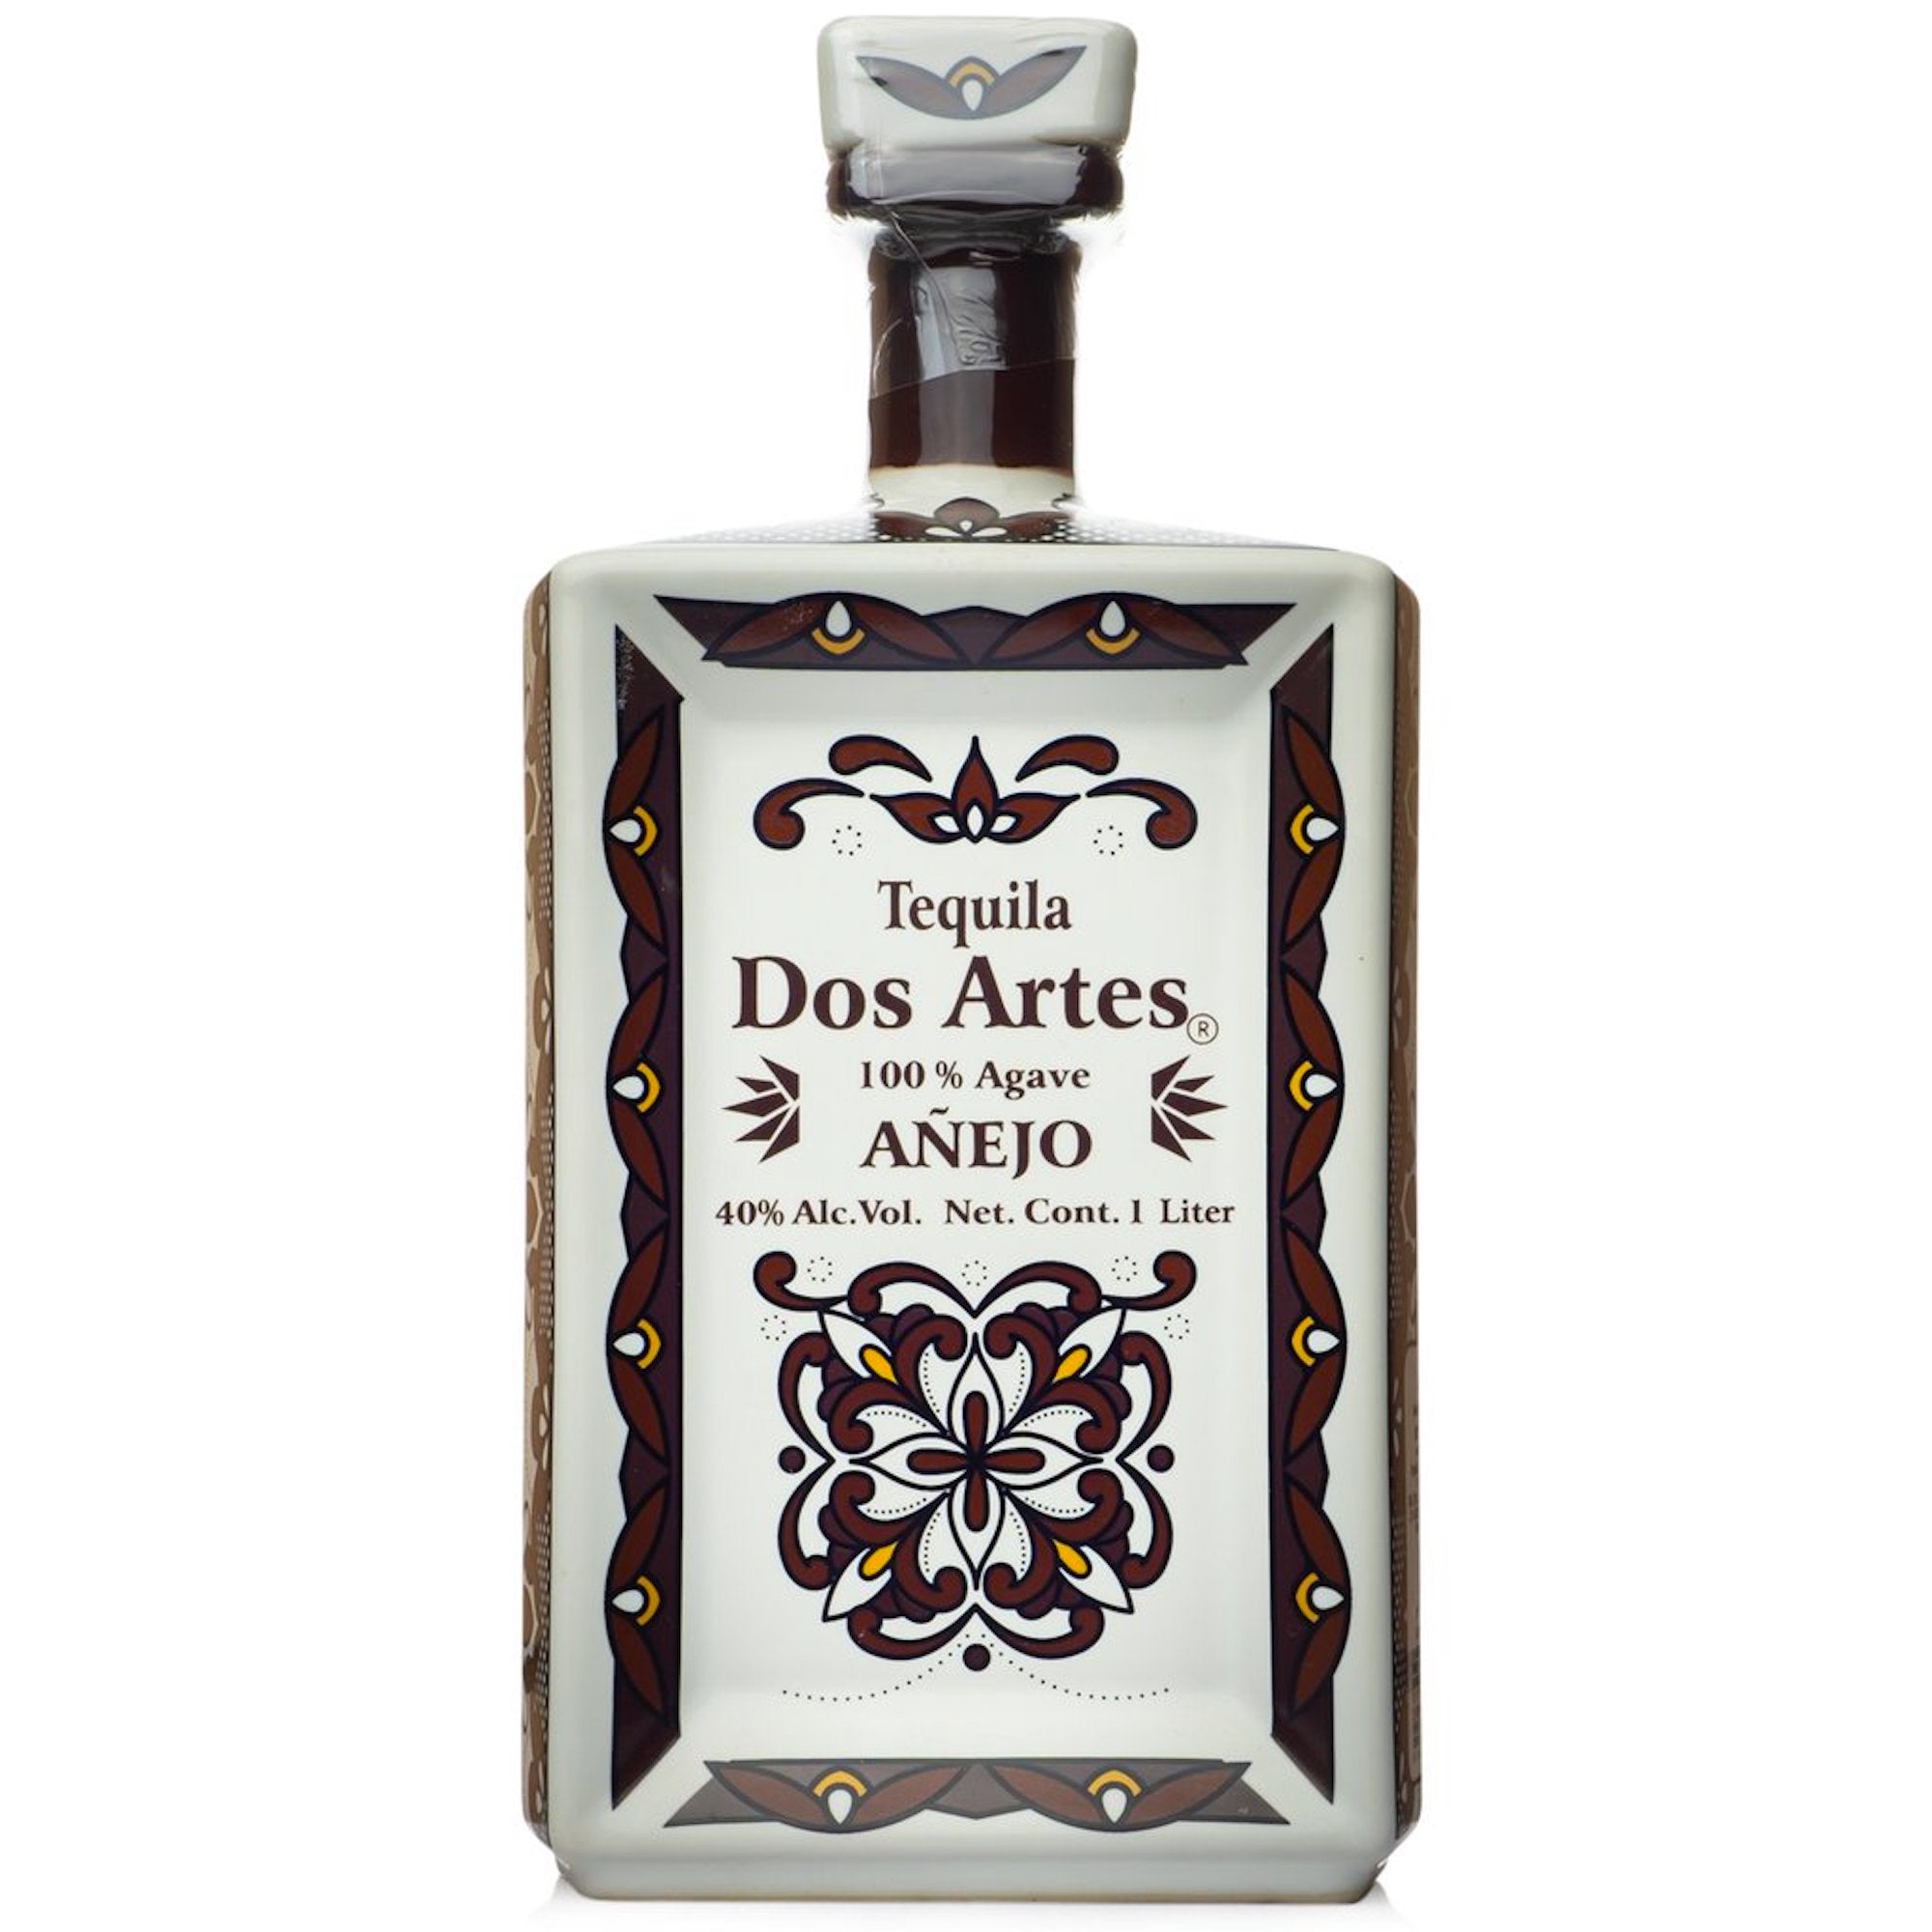 Dos Artes Añejo Tequila